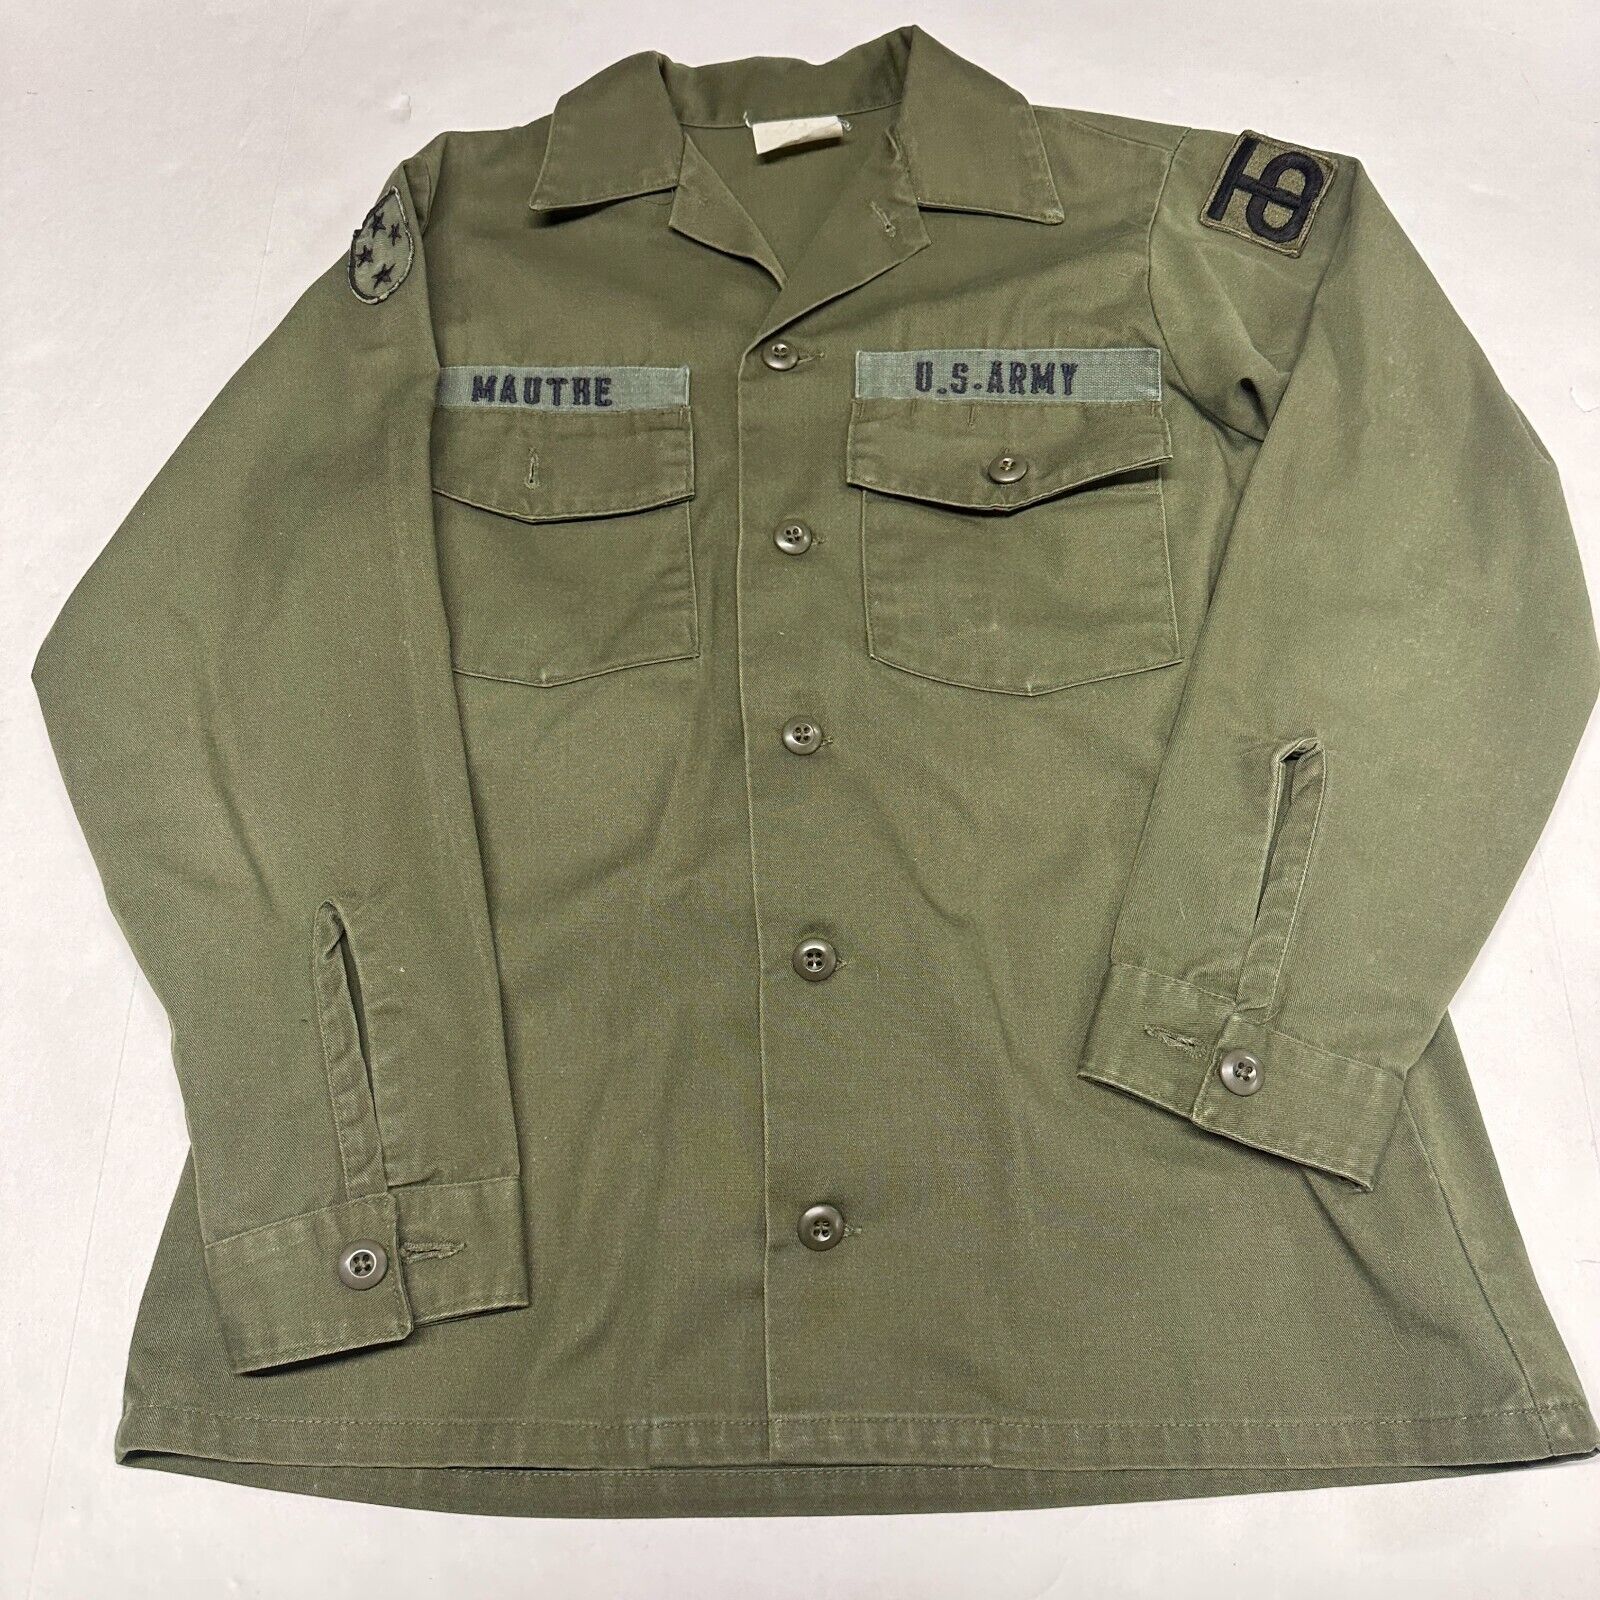 VTG 60s Vietnam Era Military Utility OG 107 uniform Shirt Size M 13.5 x 32